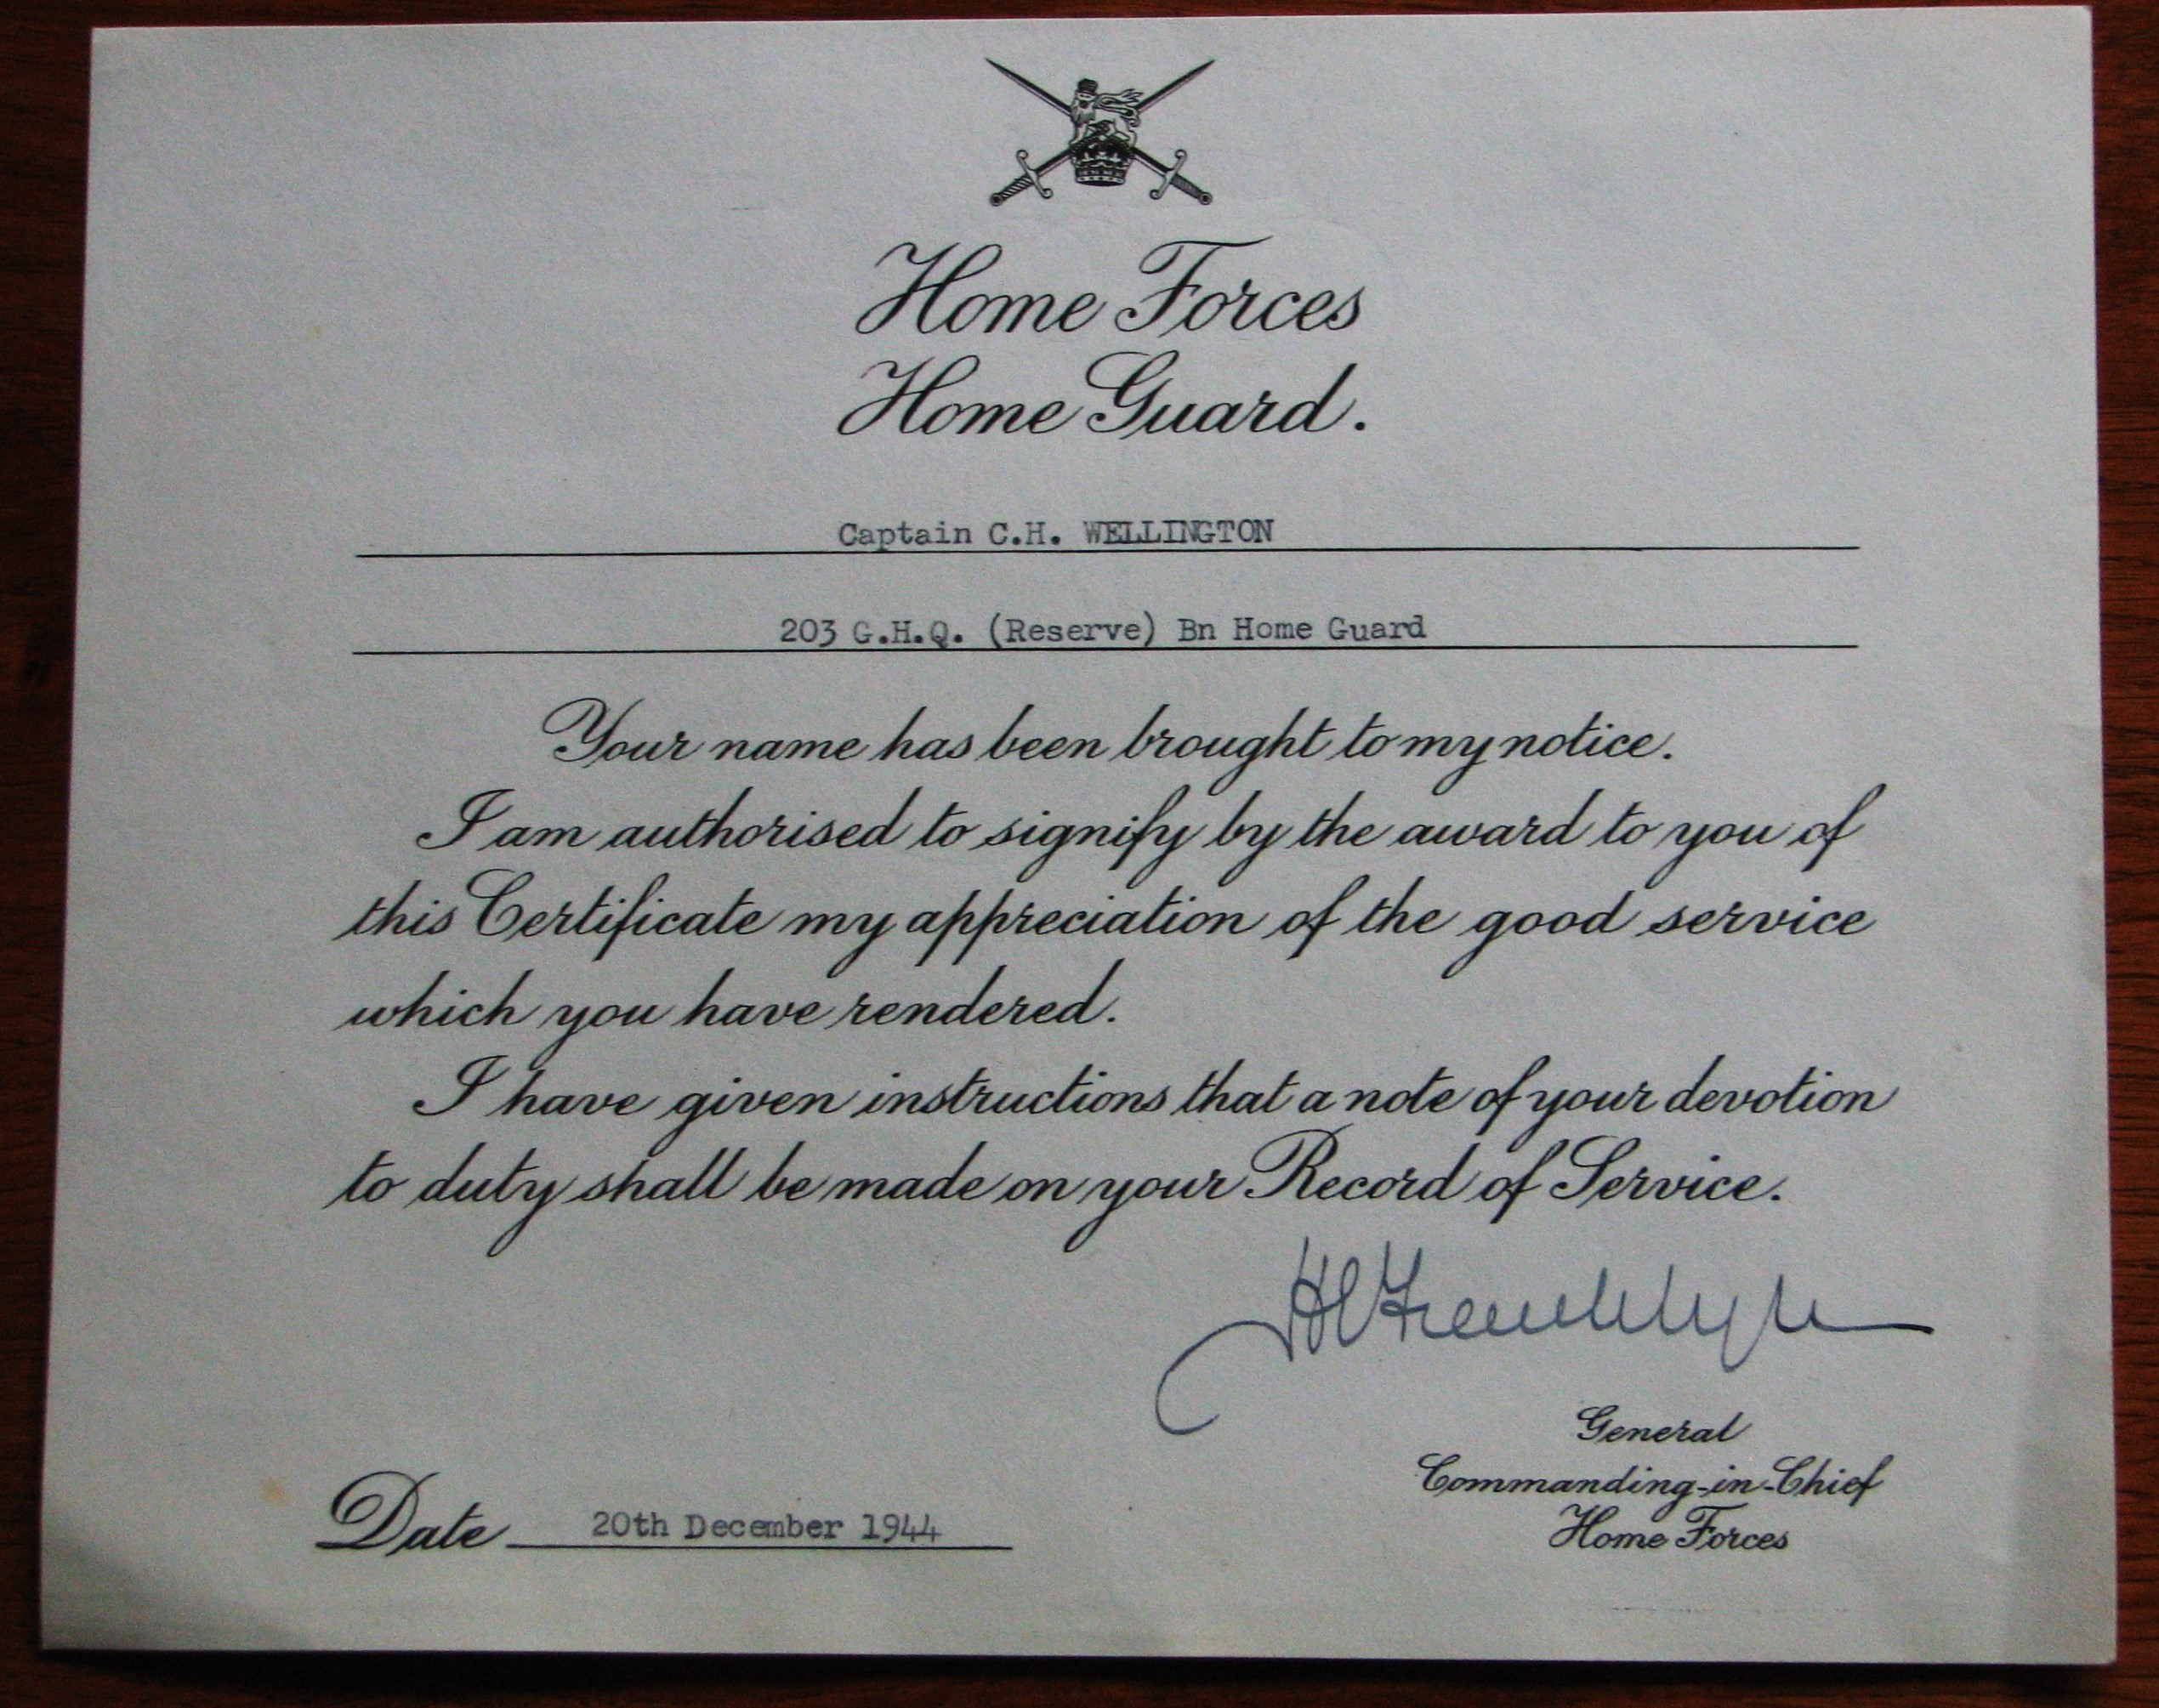 Cyril Wellington certificate of service